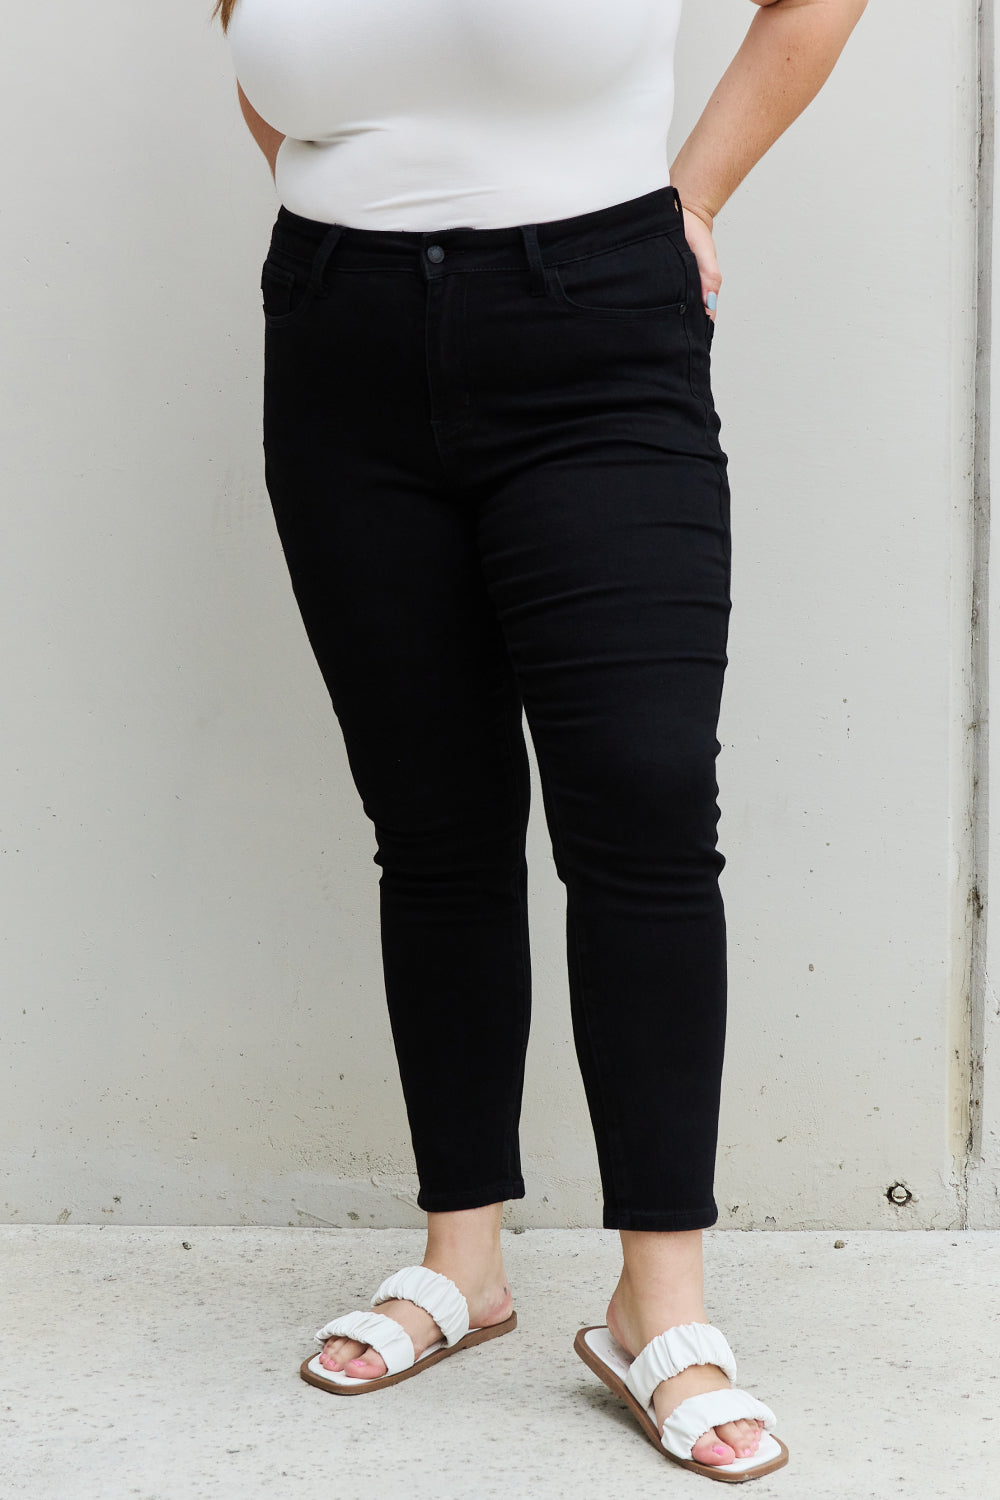 Plus Size, Judy Blue, Mid-Rise, Black Slim Fit Jeans Style 88756